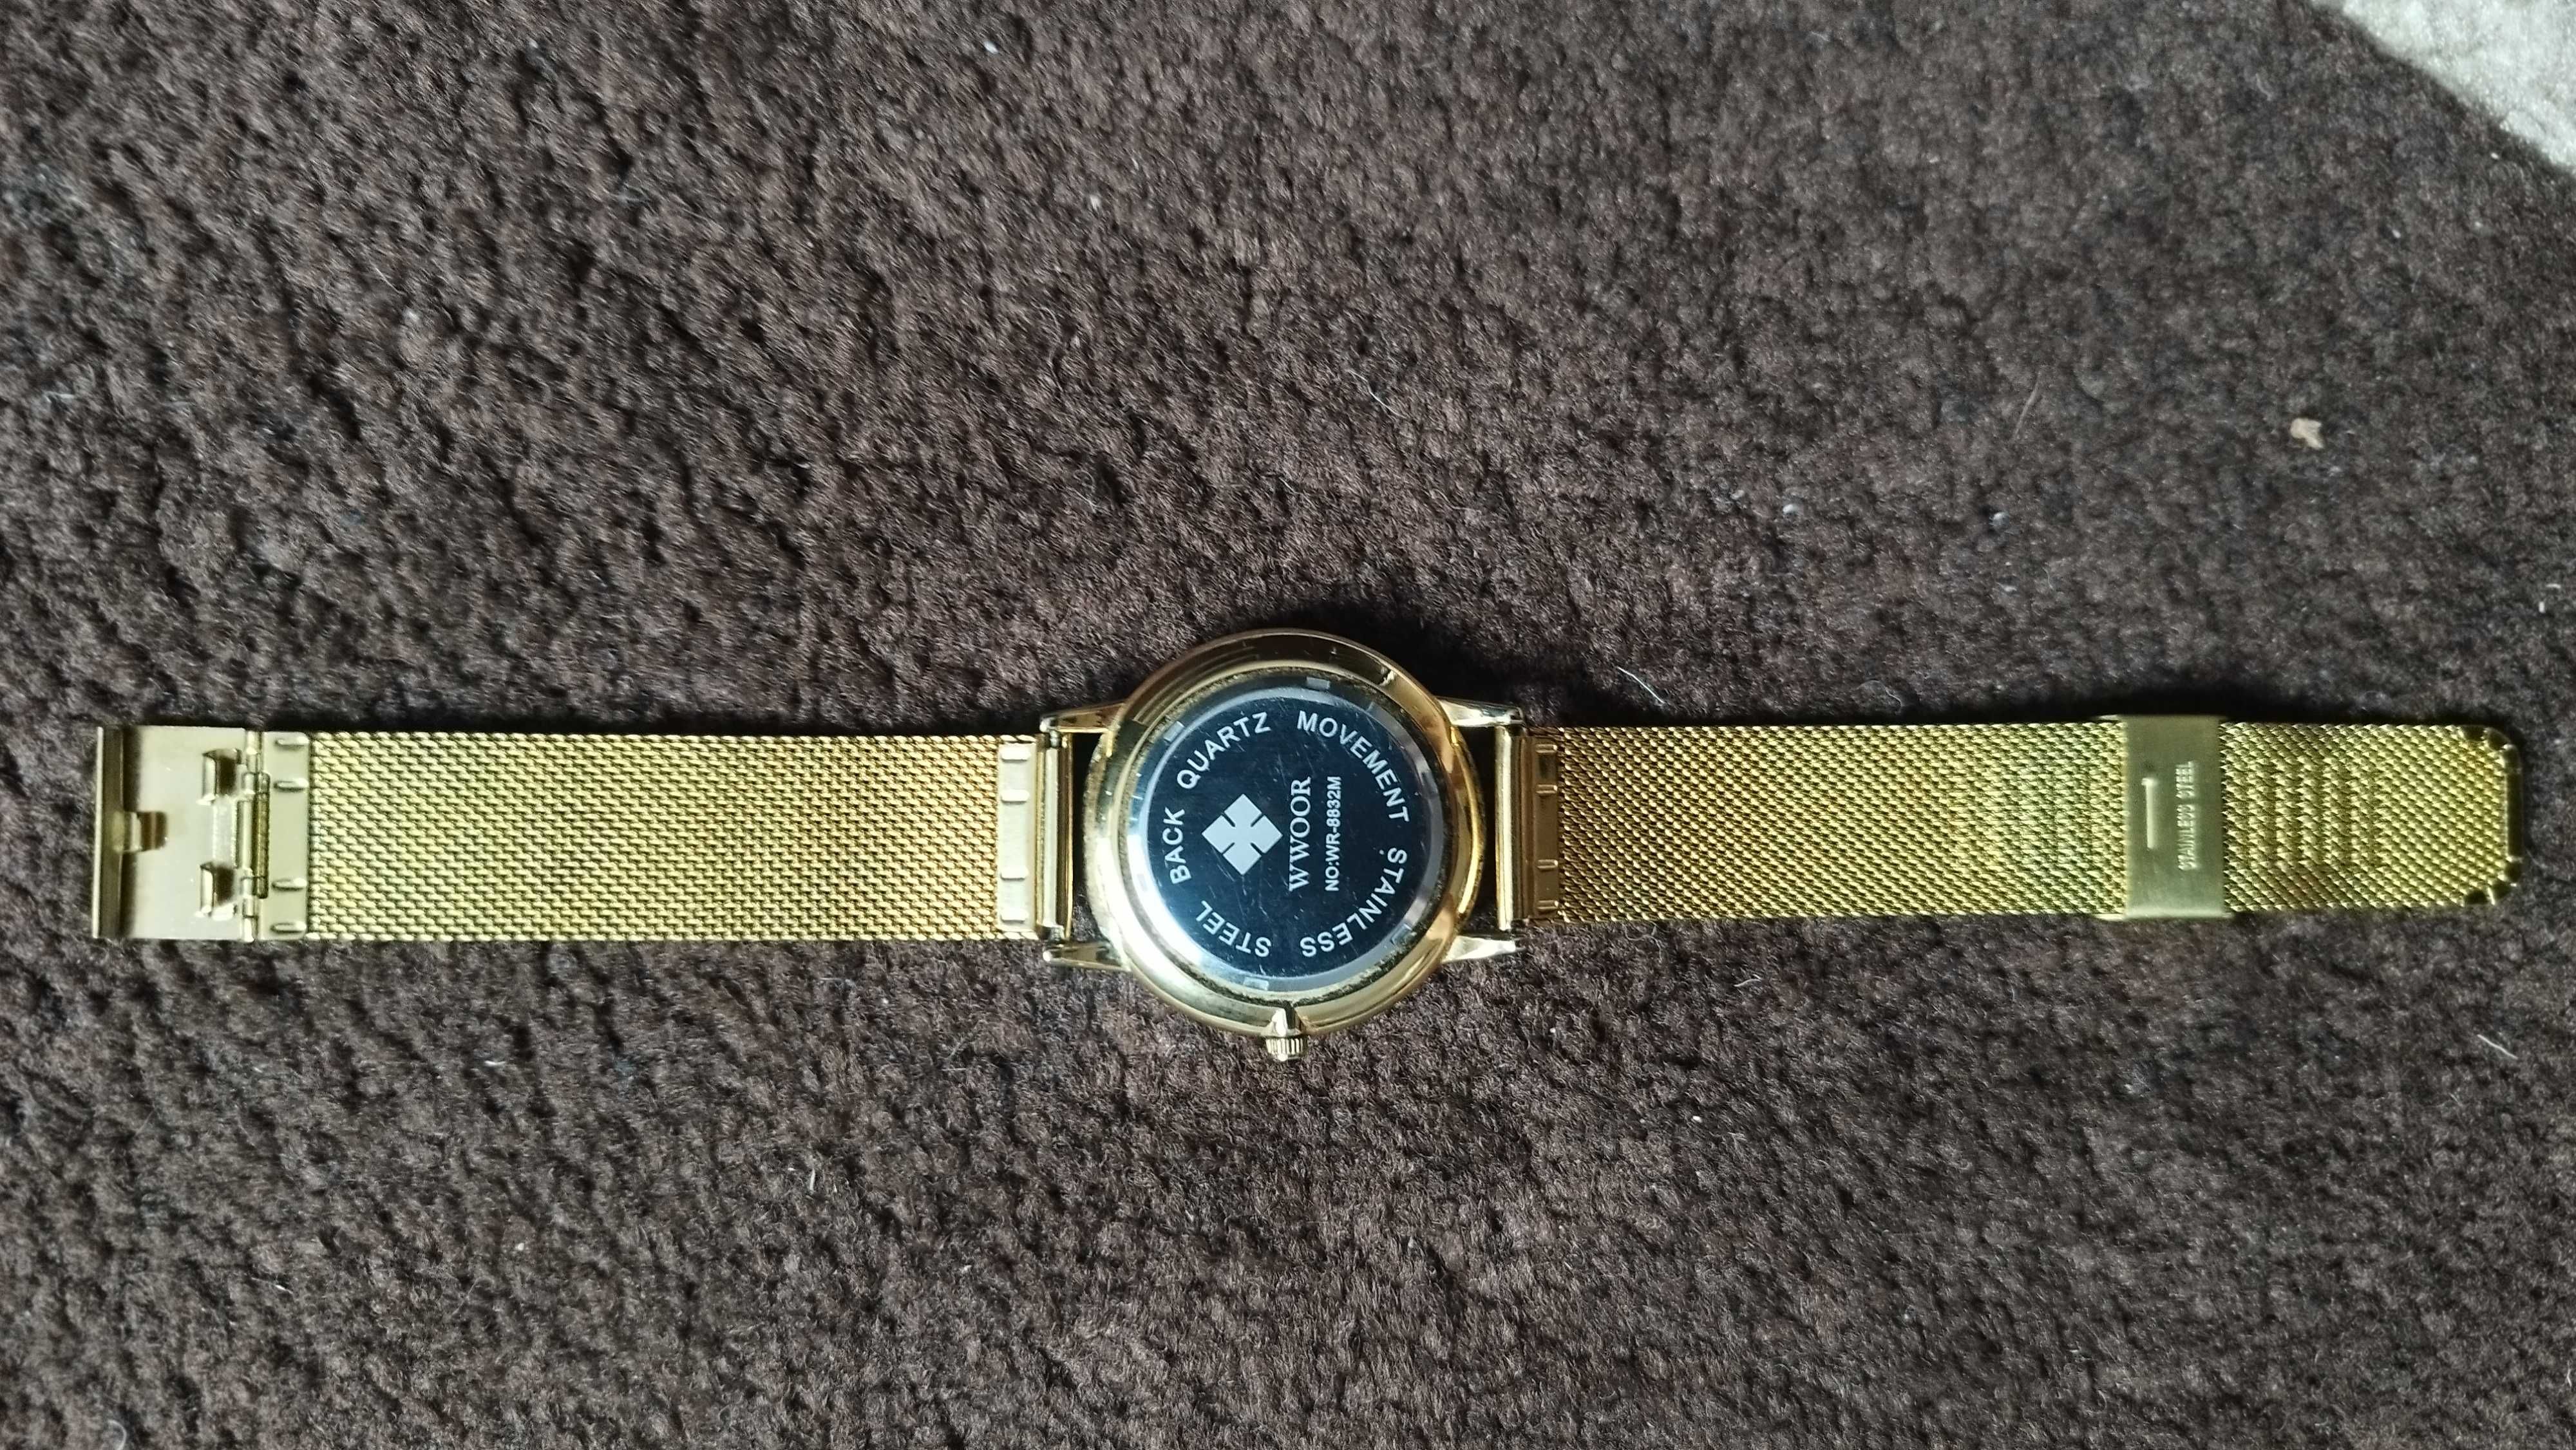 Zegarek Wwoor w kolorze złotym